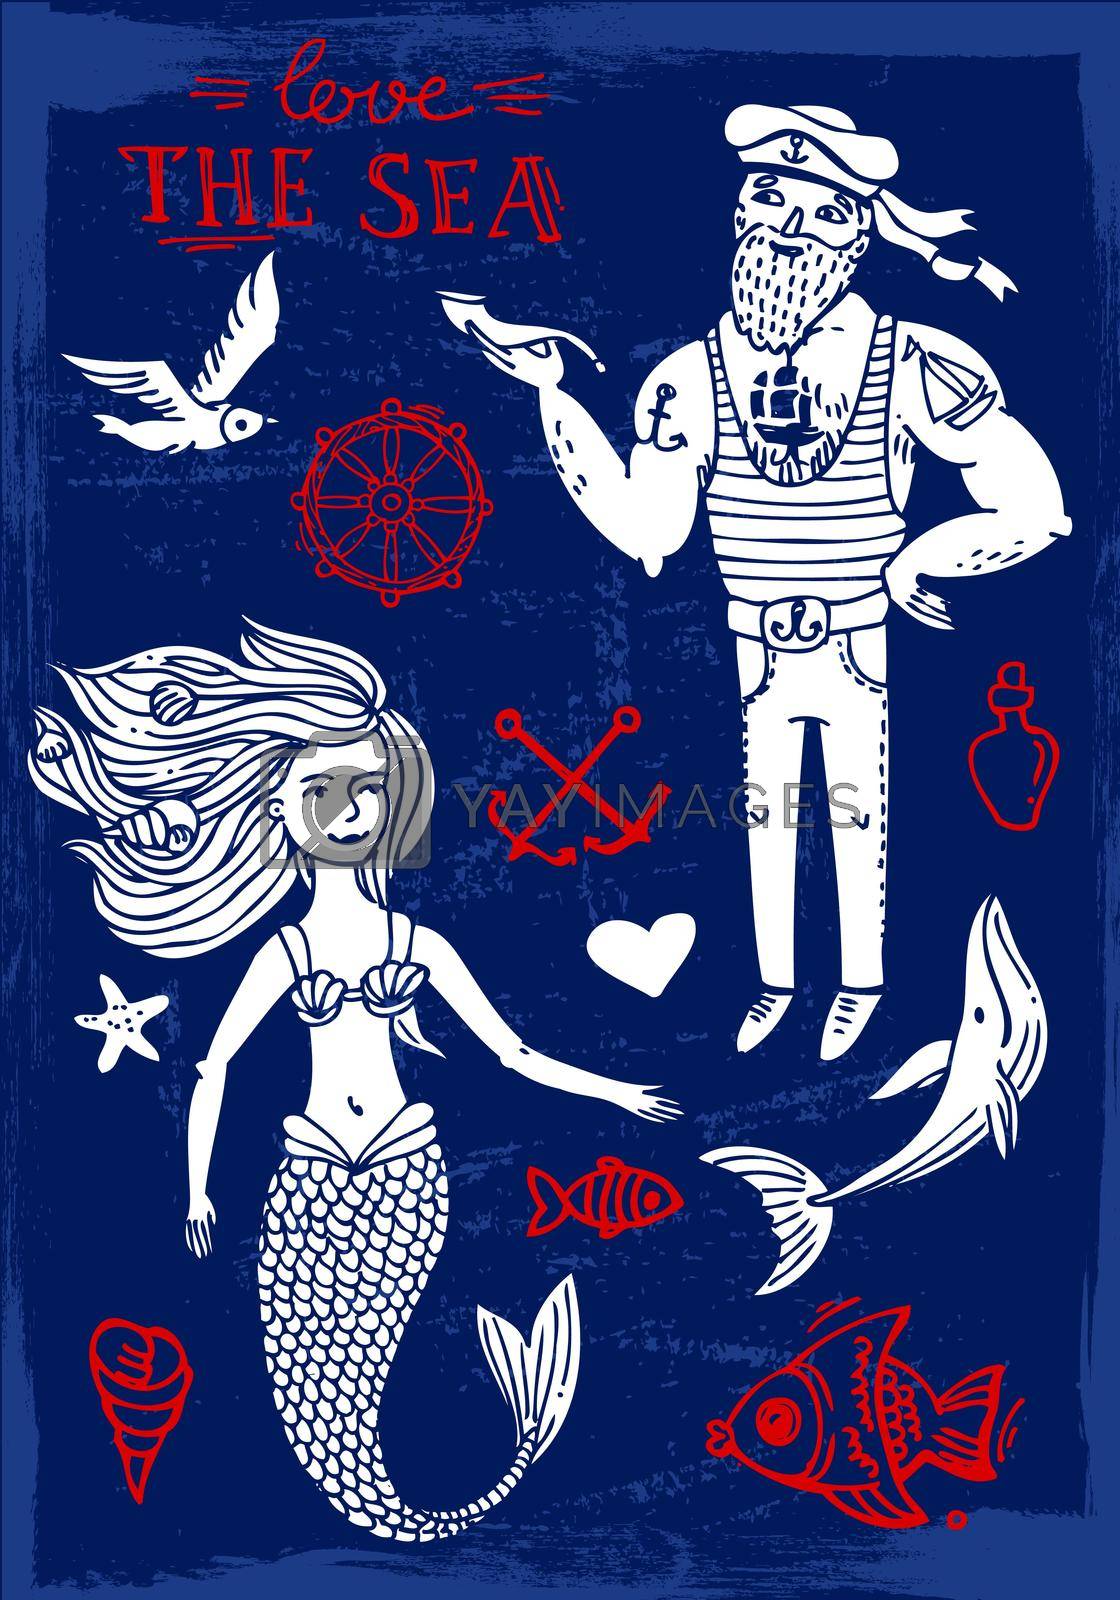 Royalty free image of sailor and mermaid by steshnikova